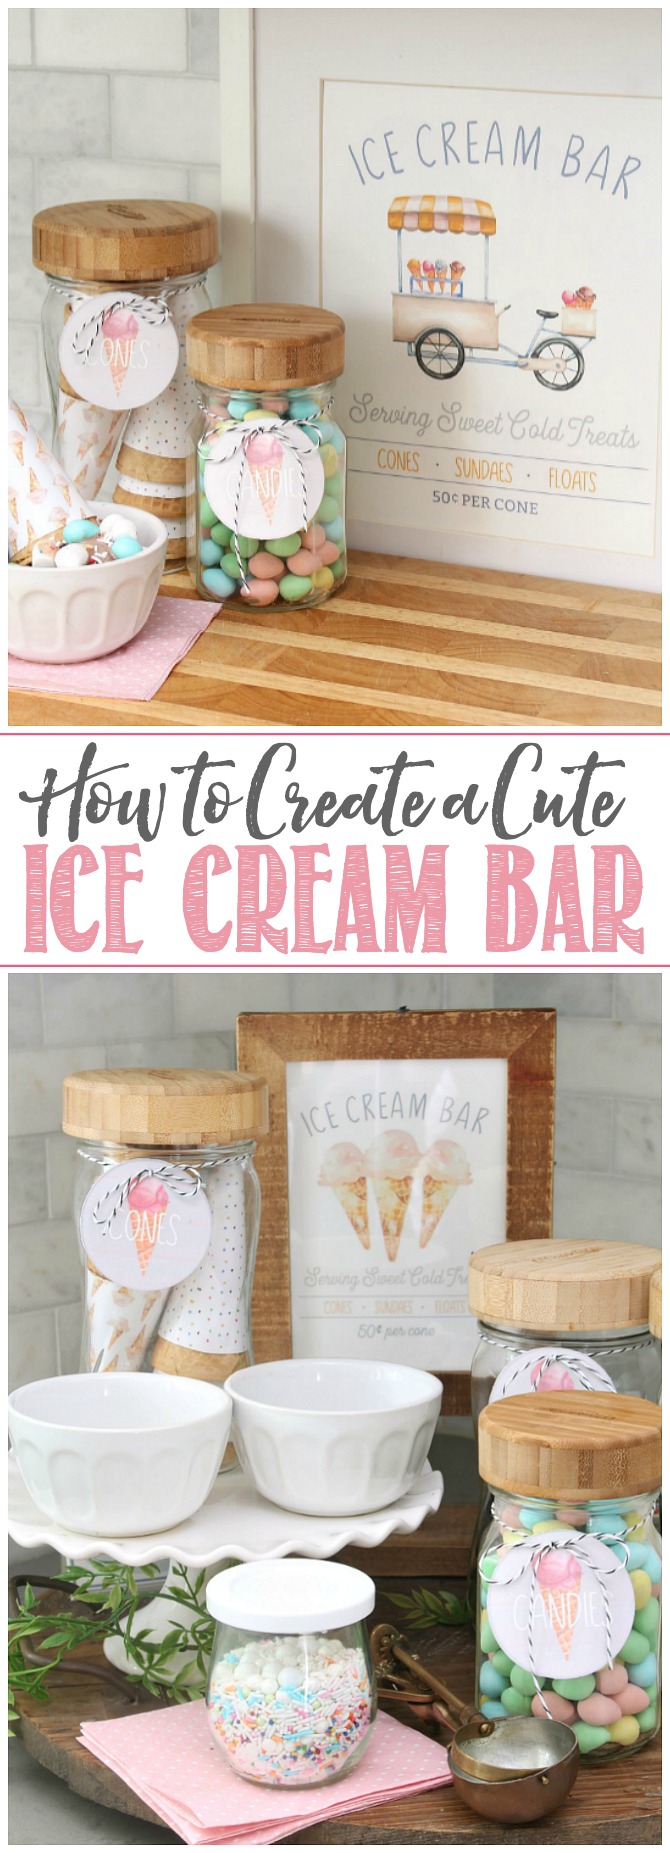 Ice cream sundae bar with free printables.